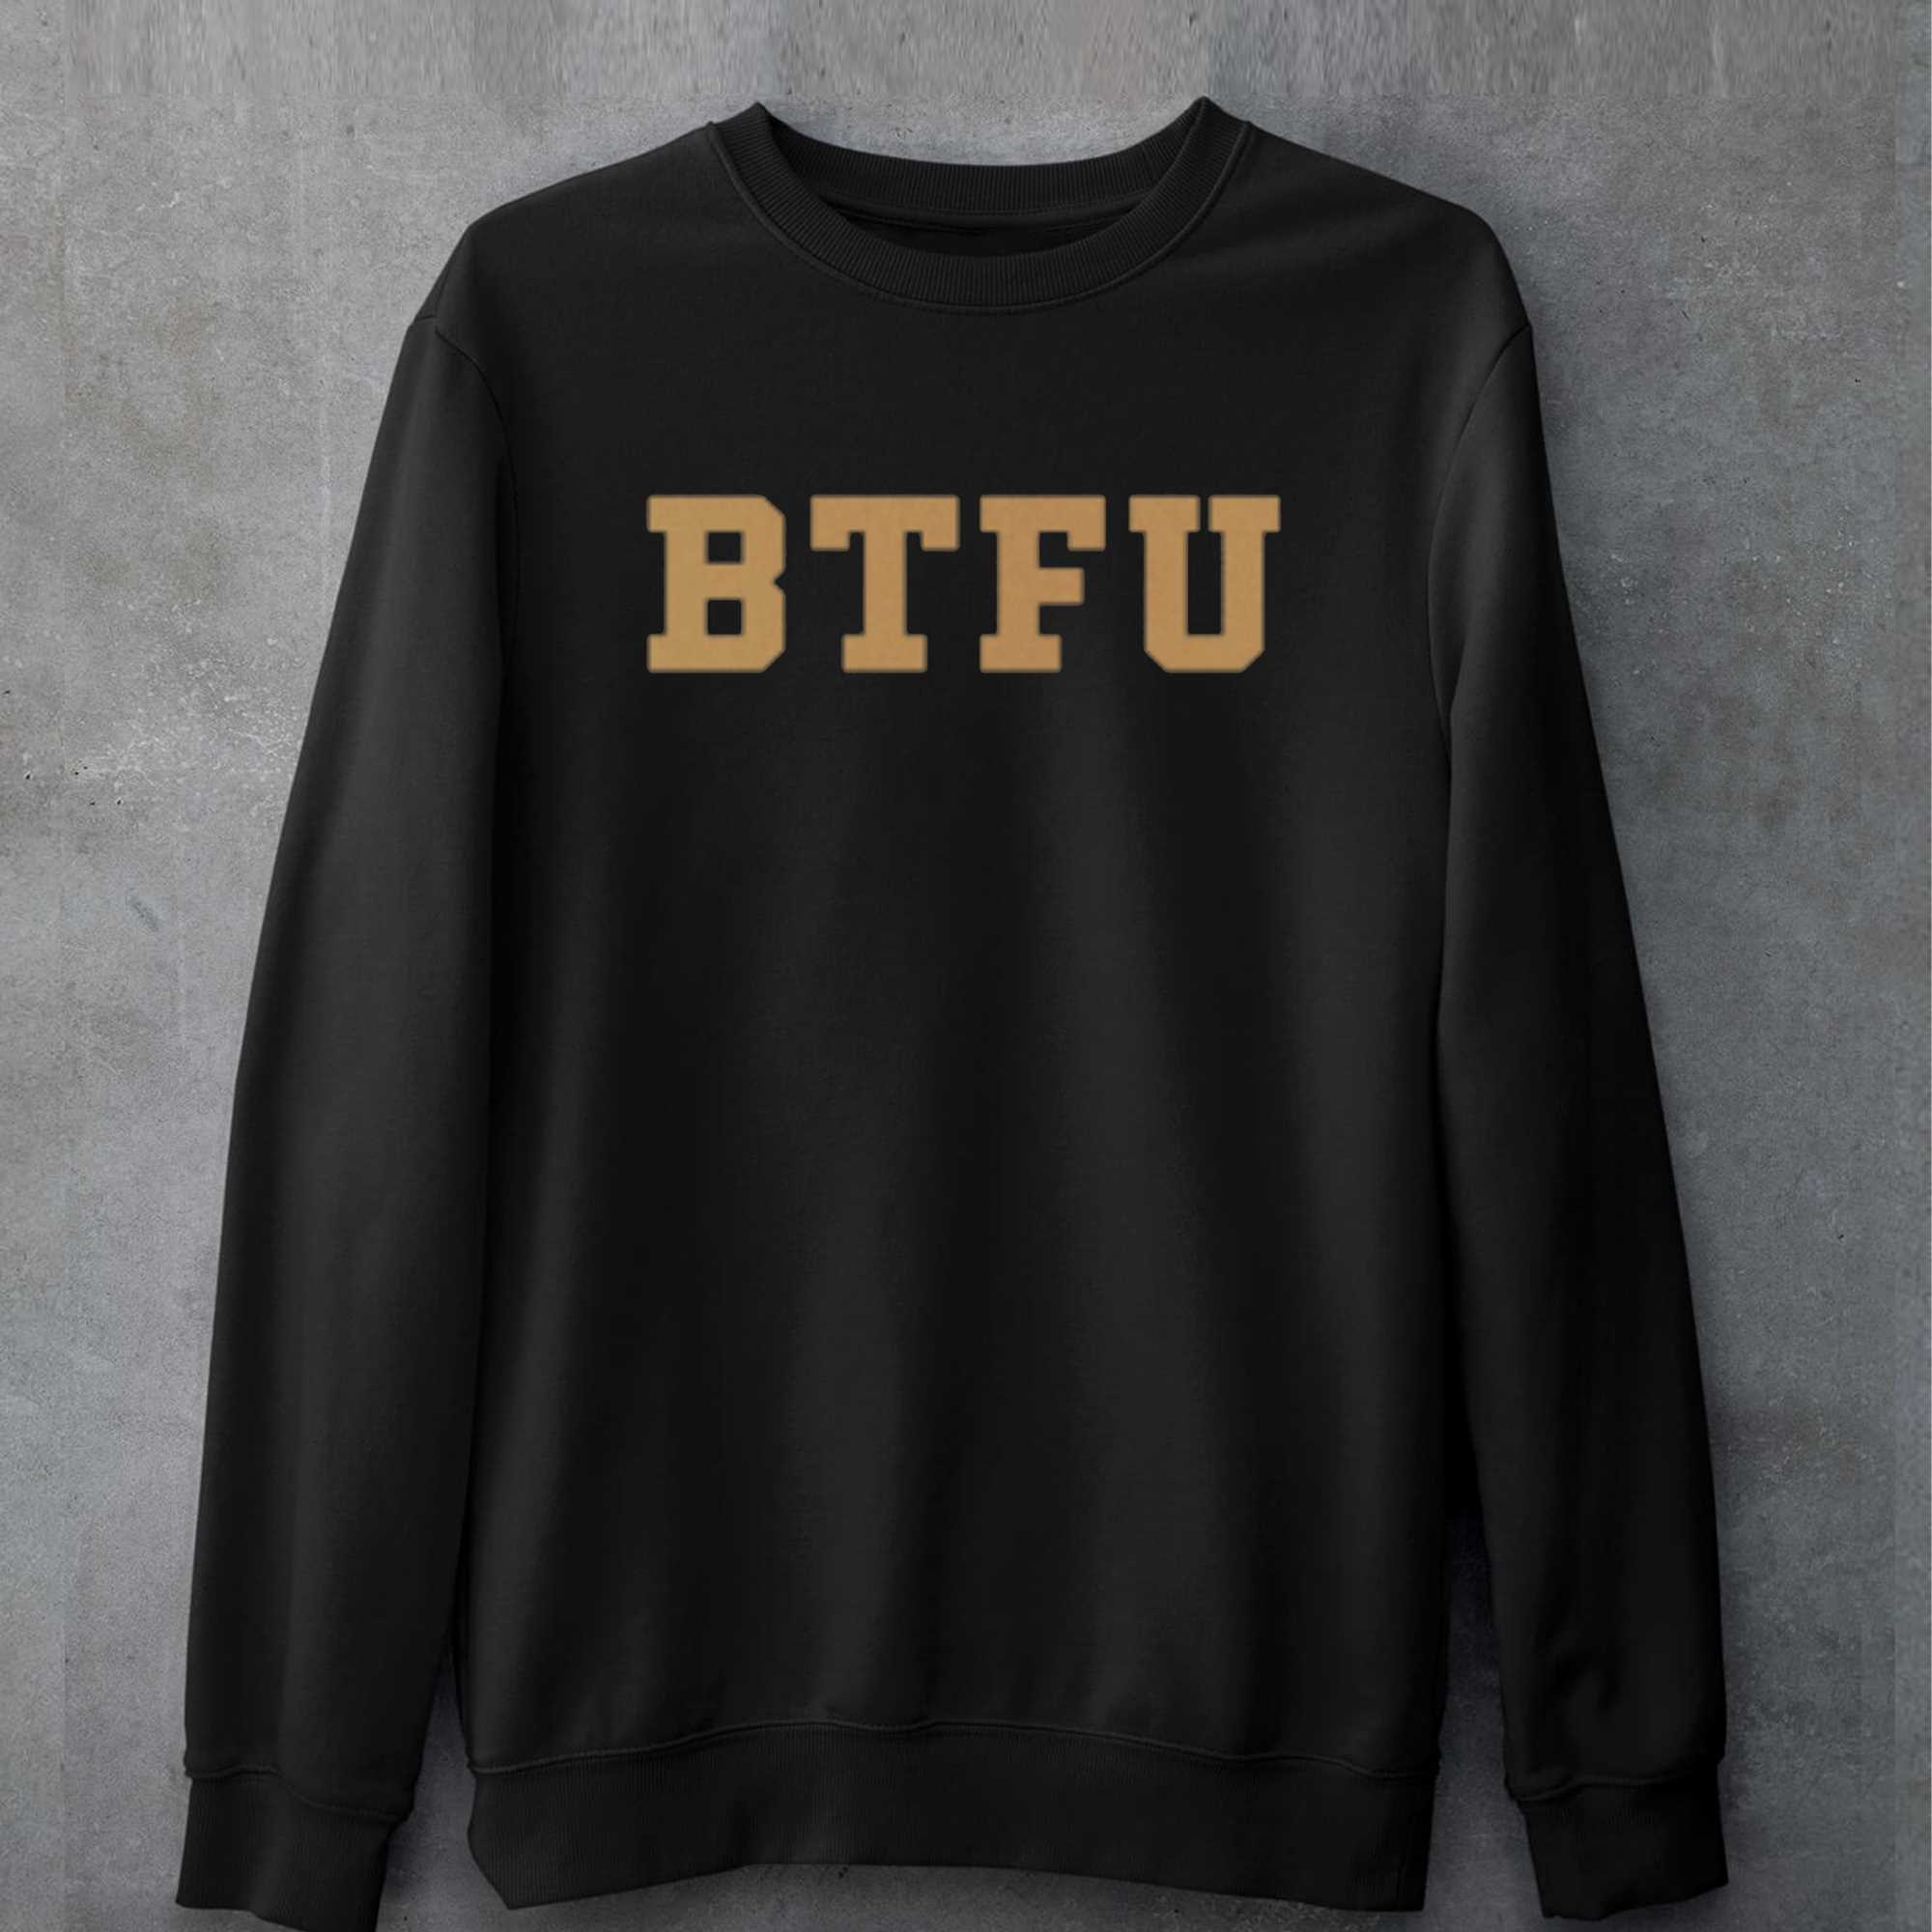 Btfu Tee Purdue Basketball T-shirt 